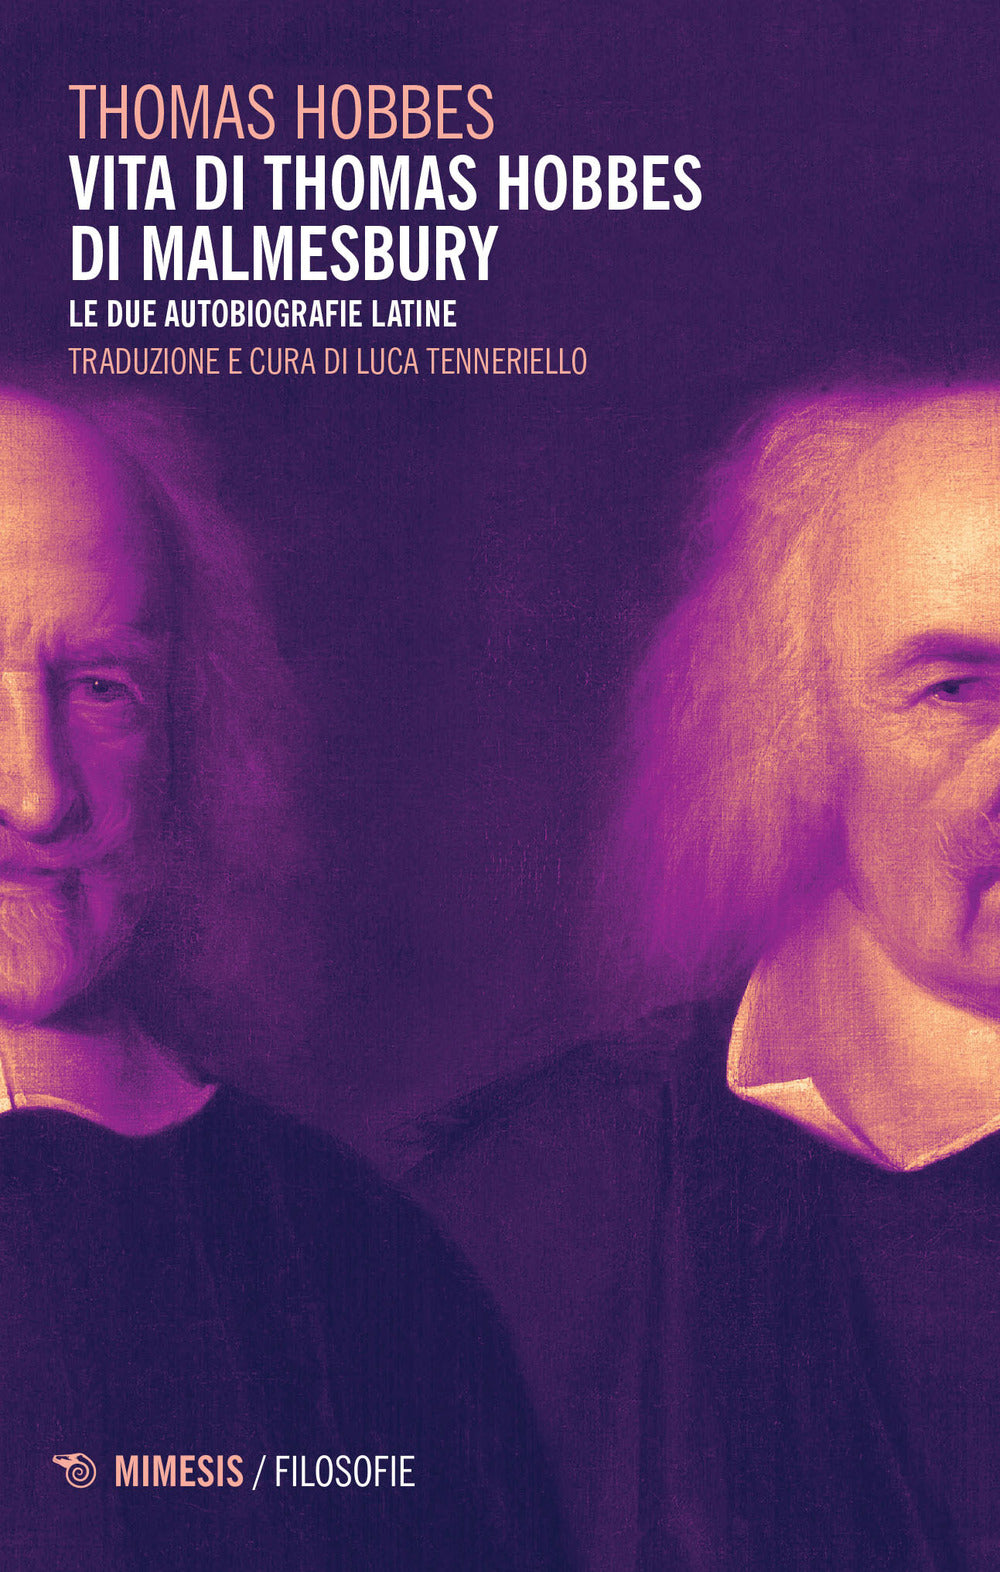 Vita di Thomas Hobbes di Malmesbury. Le due autobiografie latine.